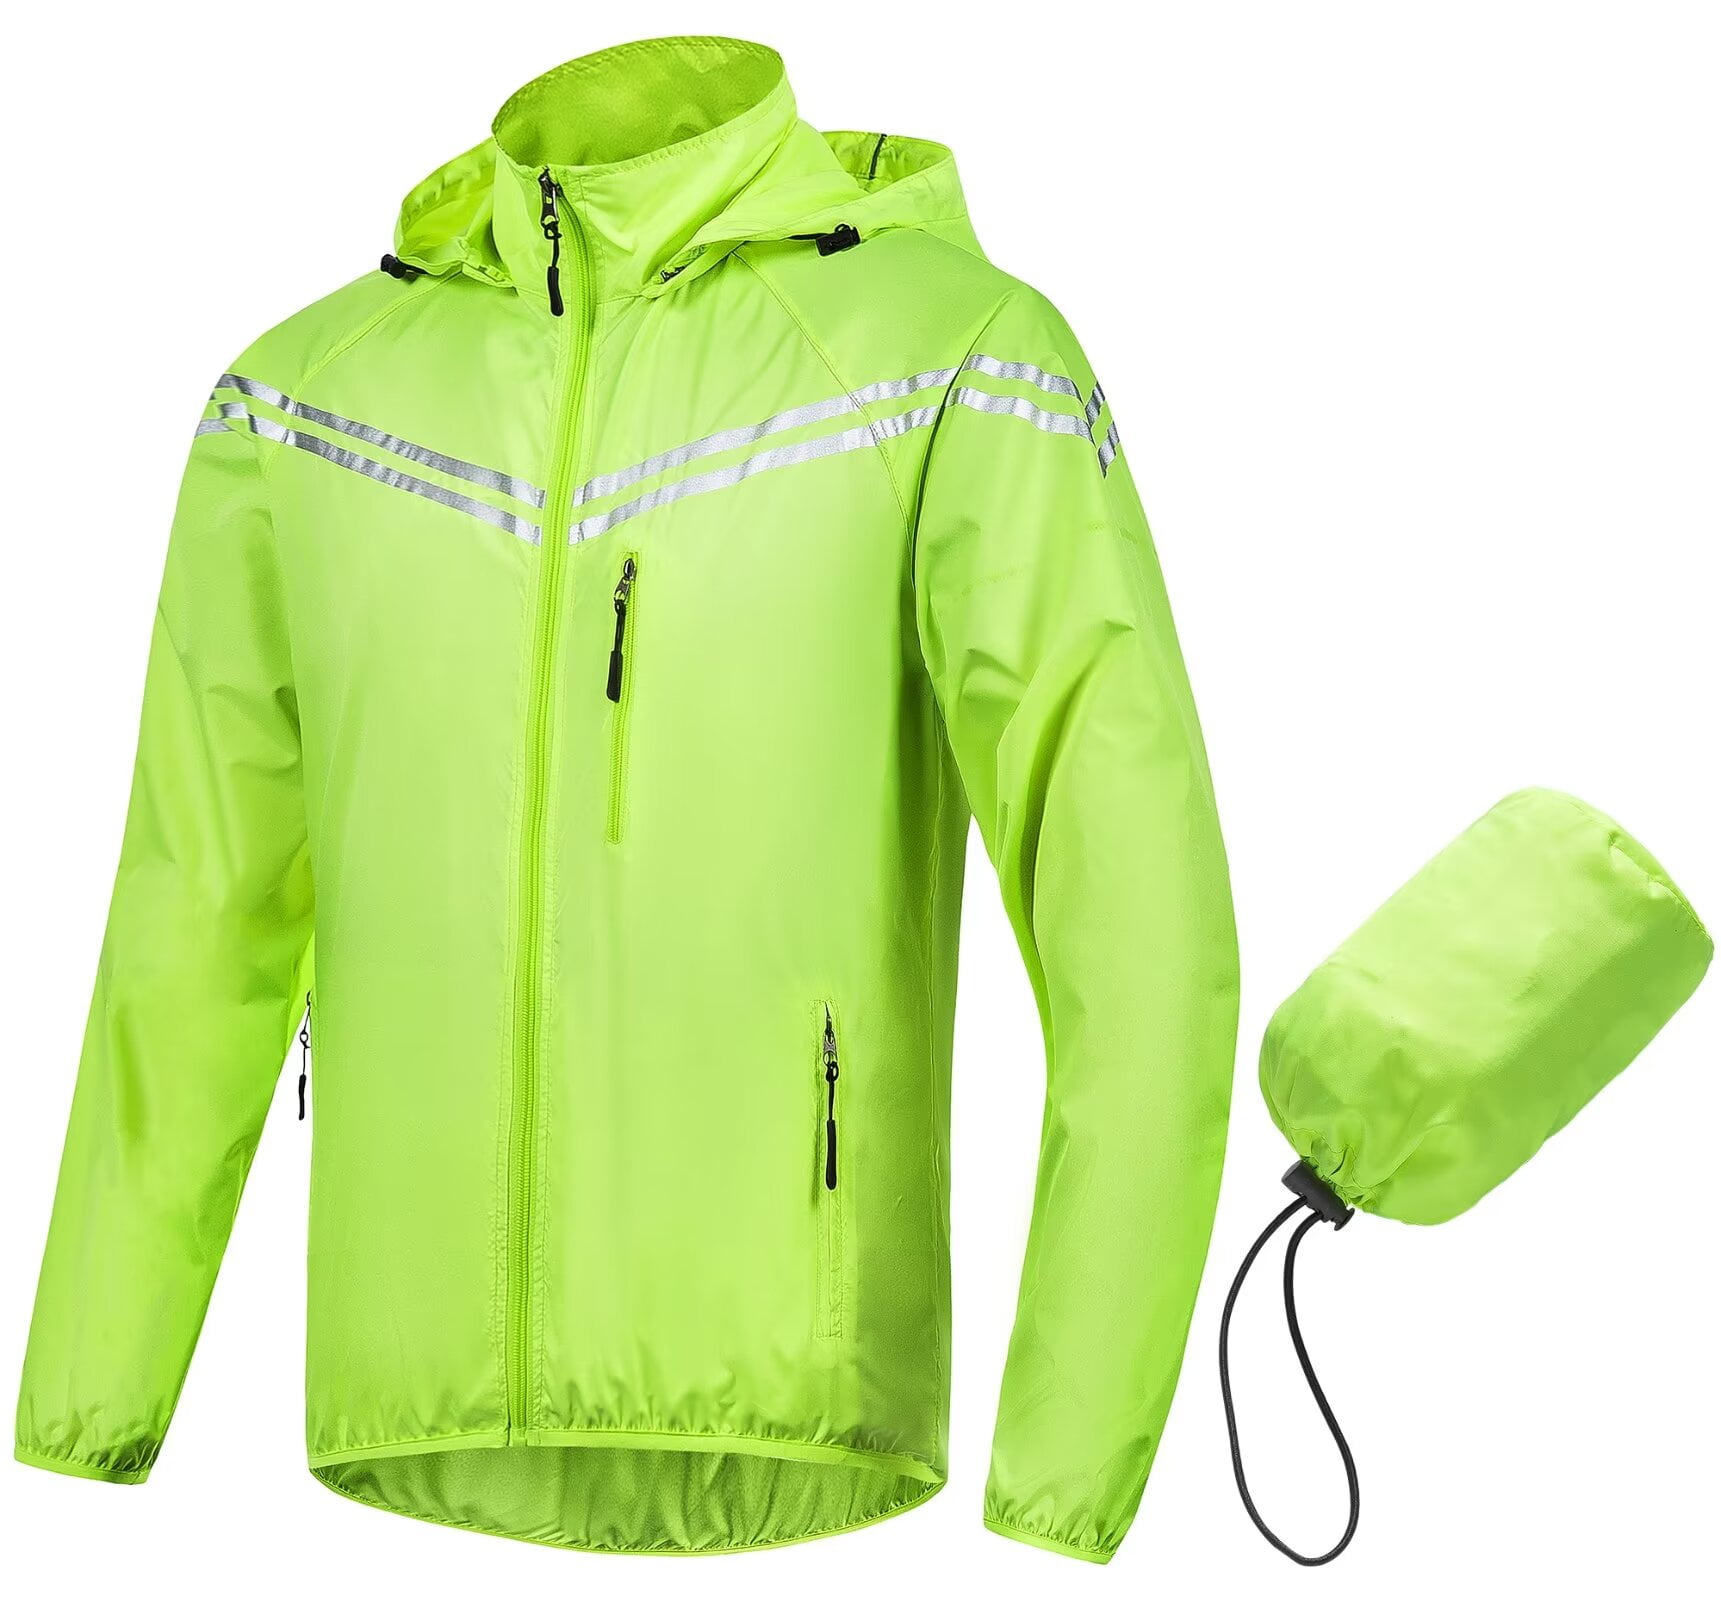 Chrisuno Men's Waterproof Cycling Bike Jacket,Running Golf Rain Jacket ...